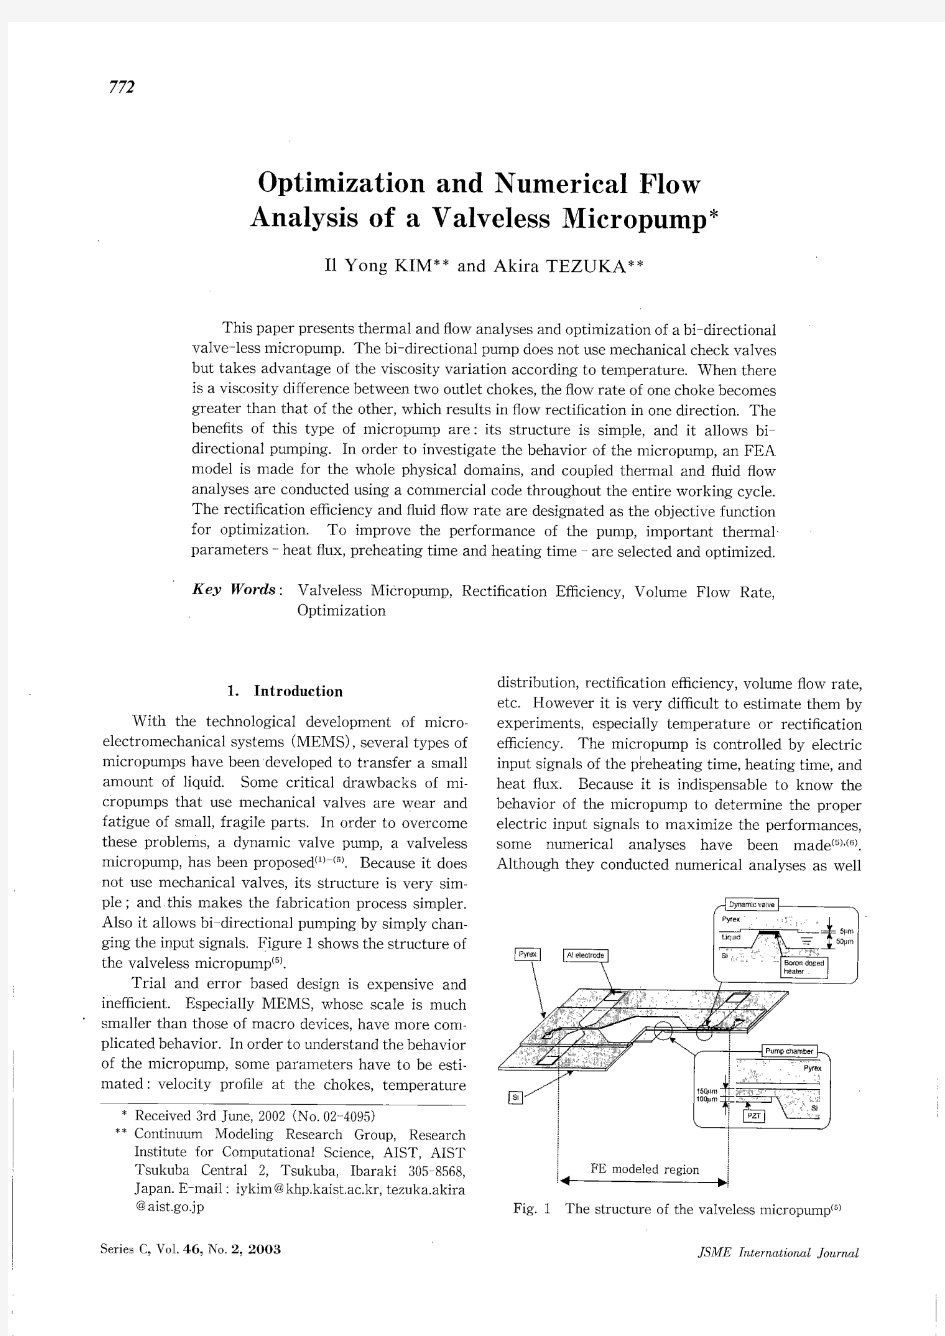 Optimization and Numerical Flow Analysis of a Valveless Micropump